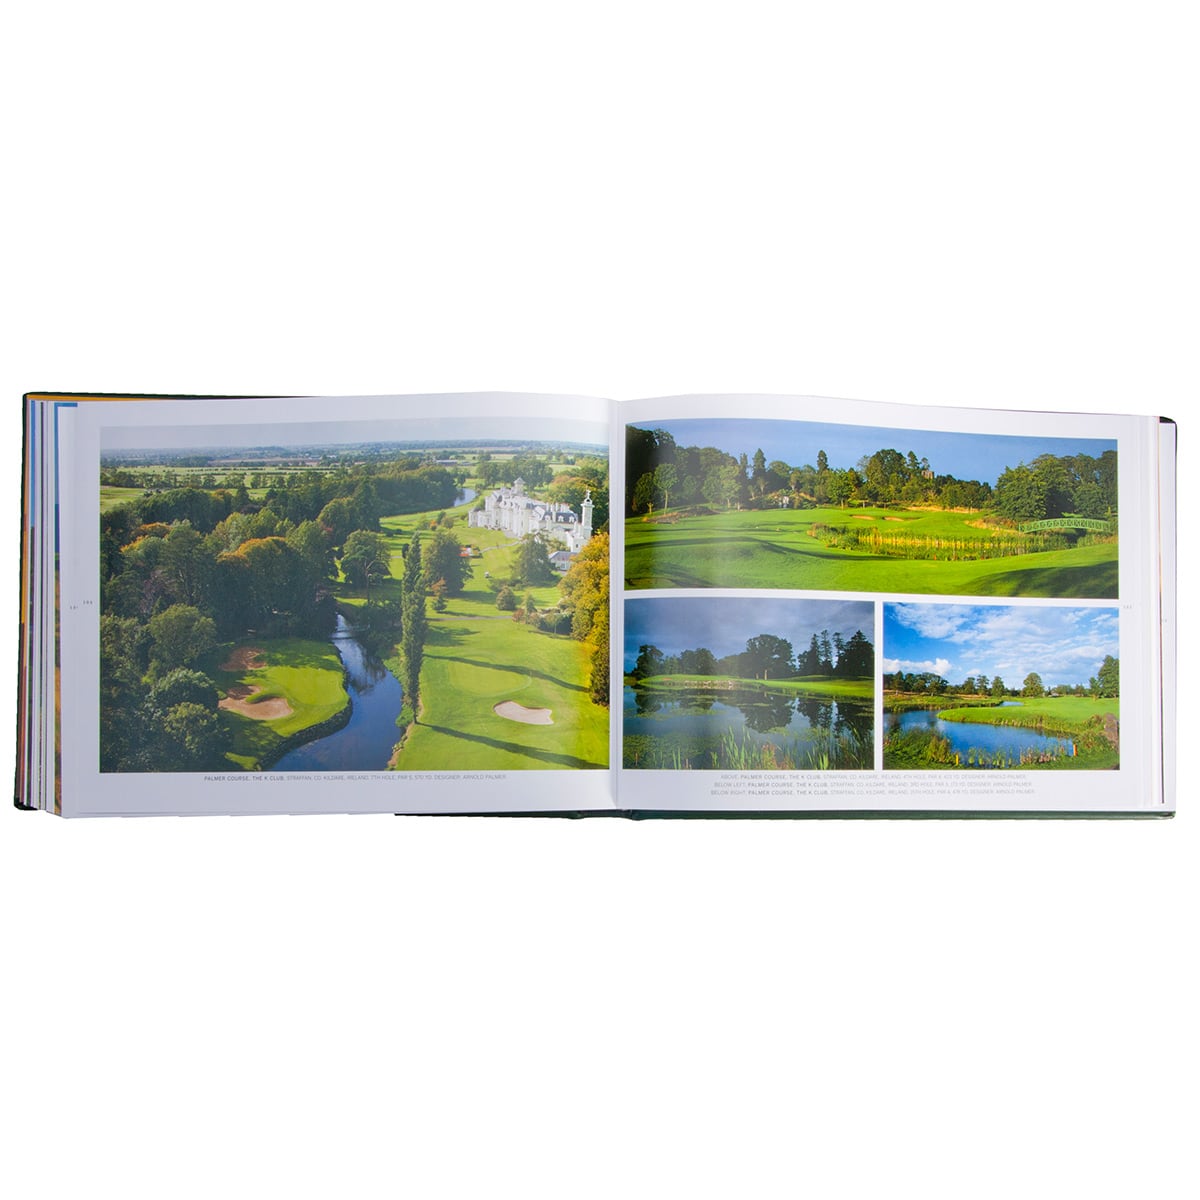 Golf Courses: Fairways of the World - Custom Coffee Table Book